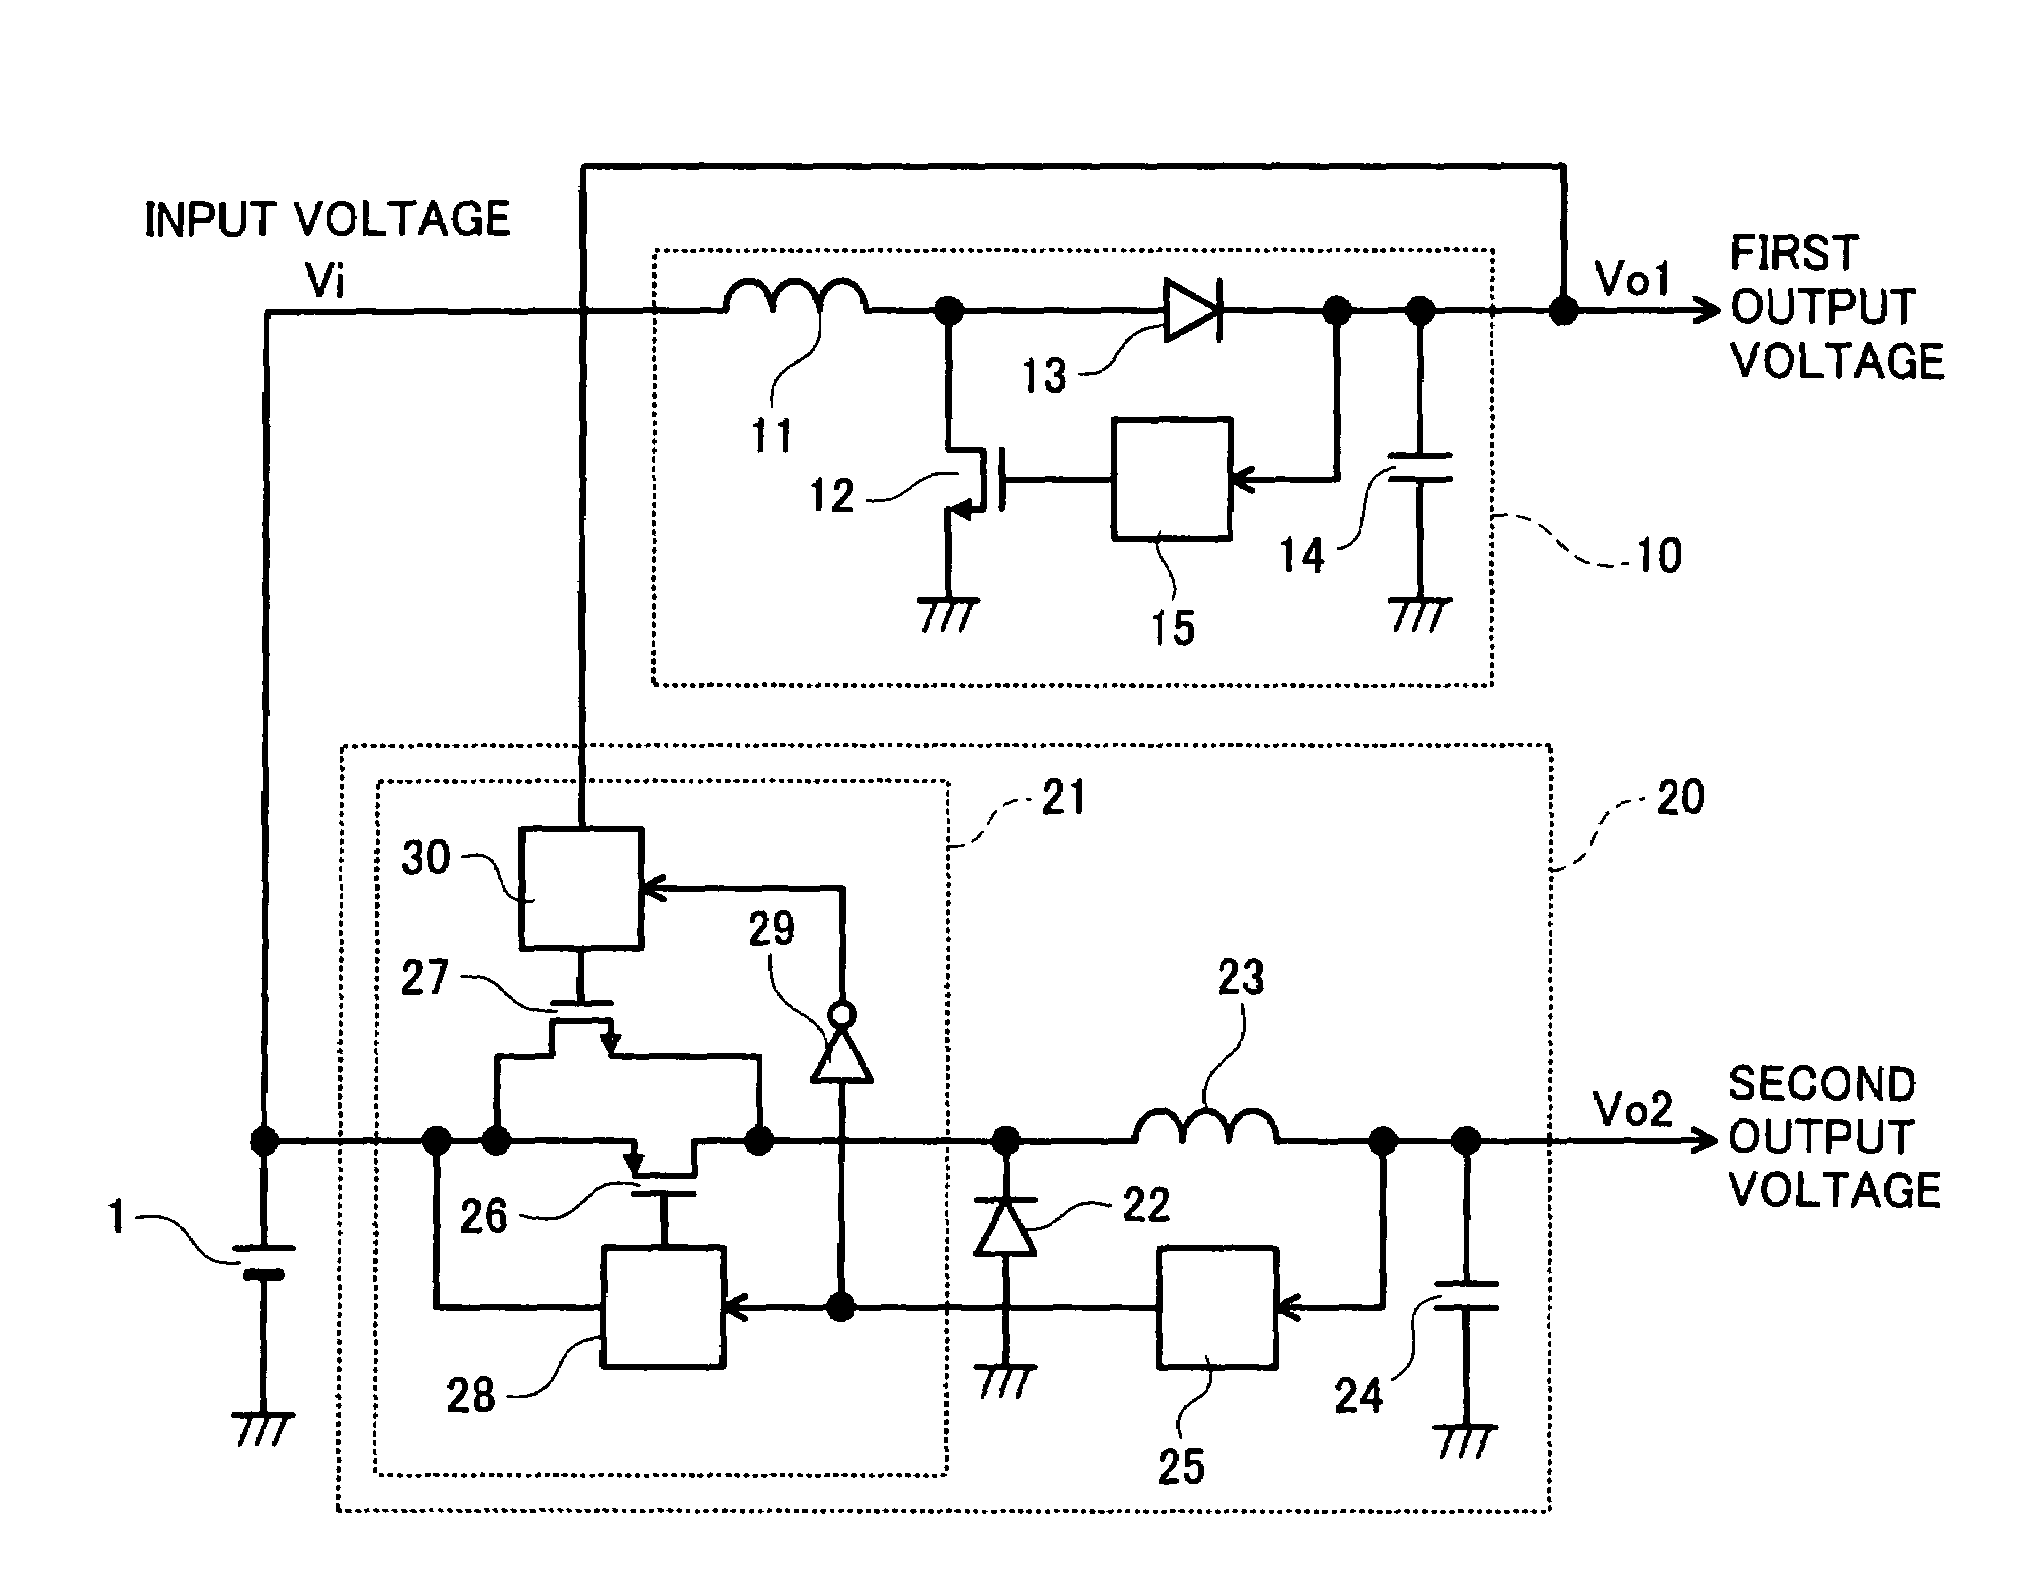 Multi-output power supply apparatus